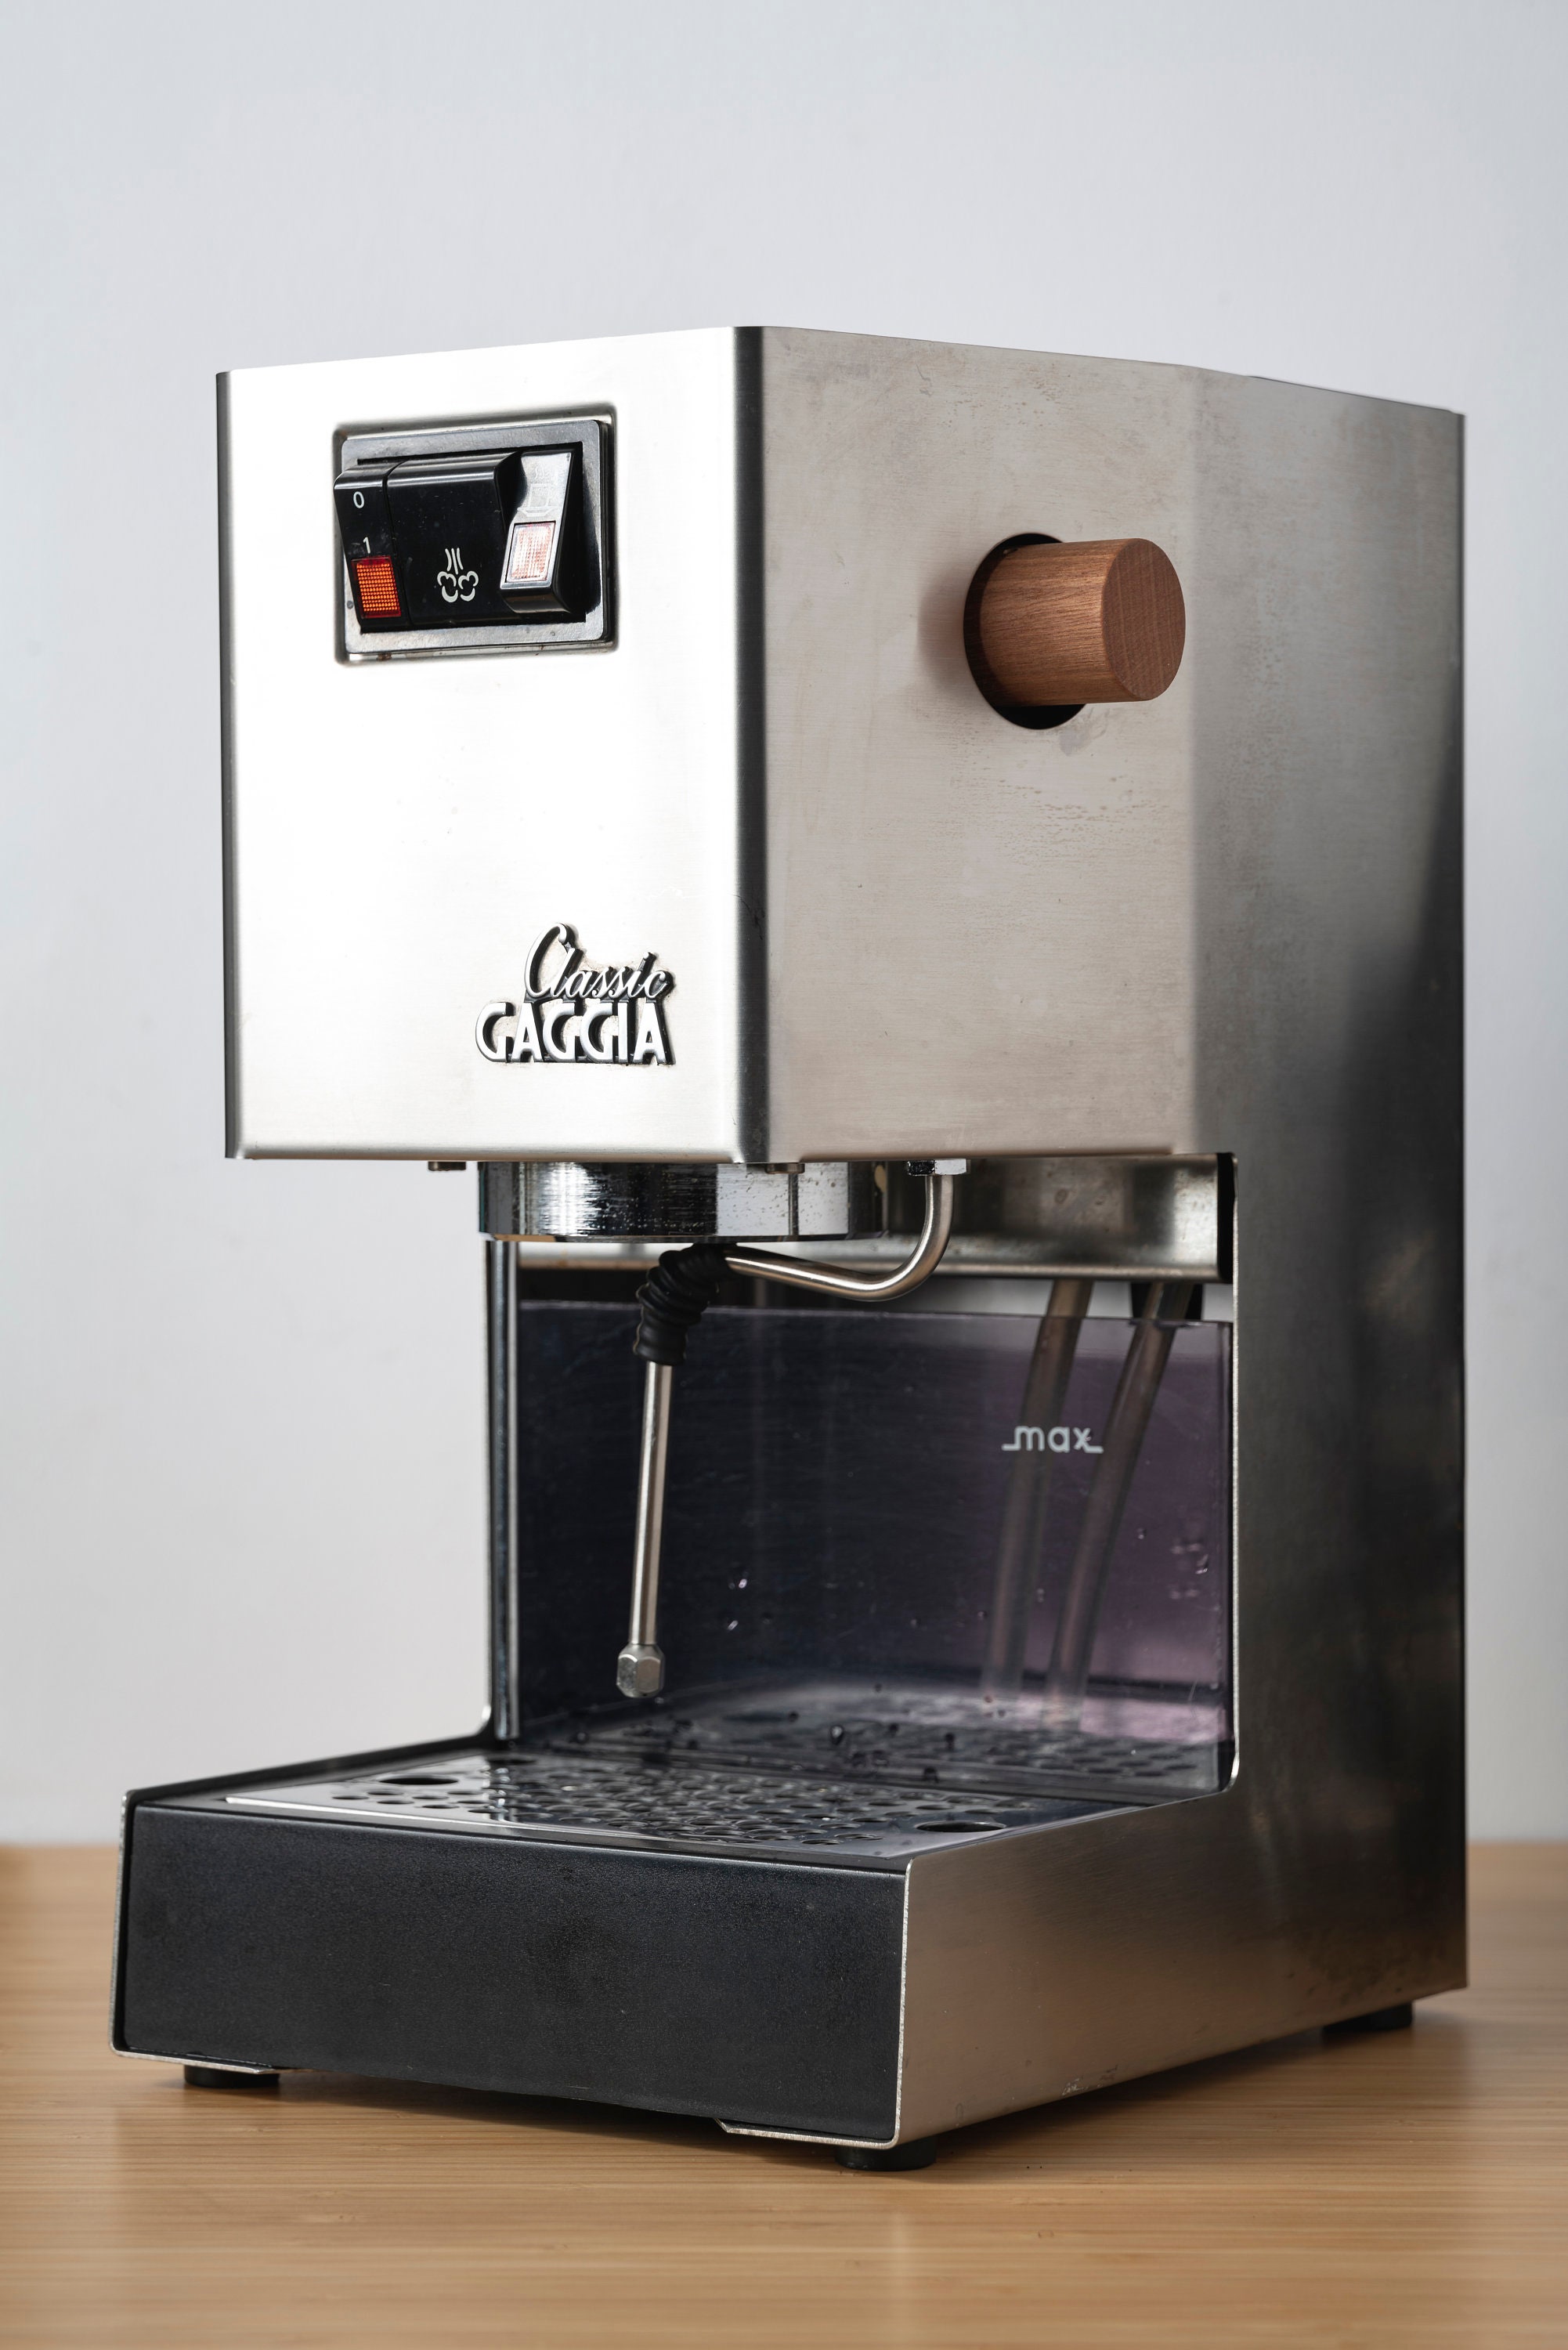 Gaggia Classic Pro Coffee Machine Wood Custom Steam Knob SINGLE Clubwood 